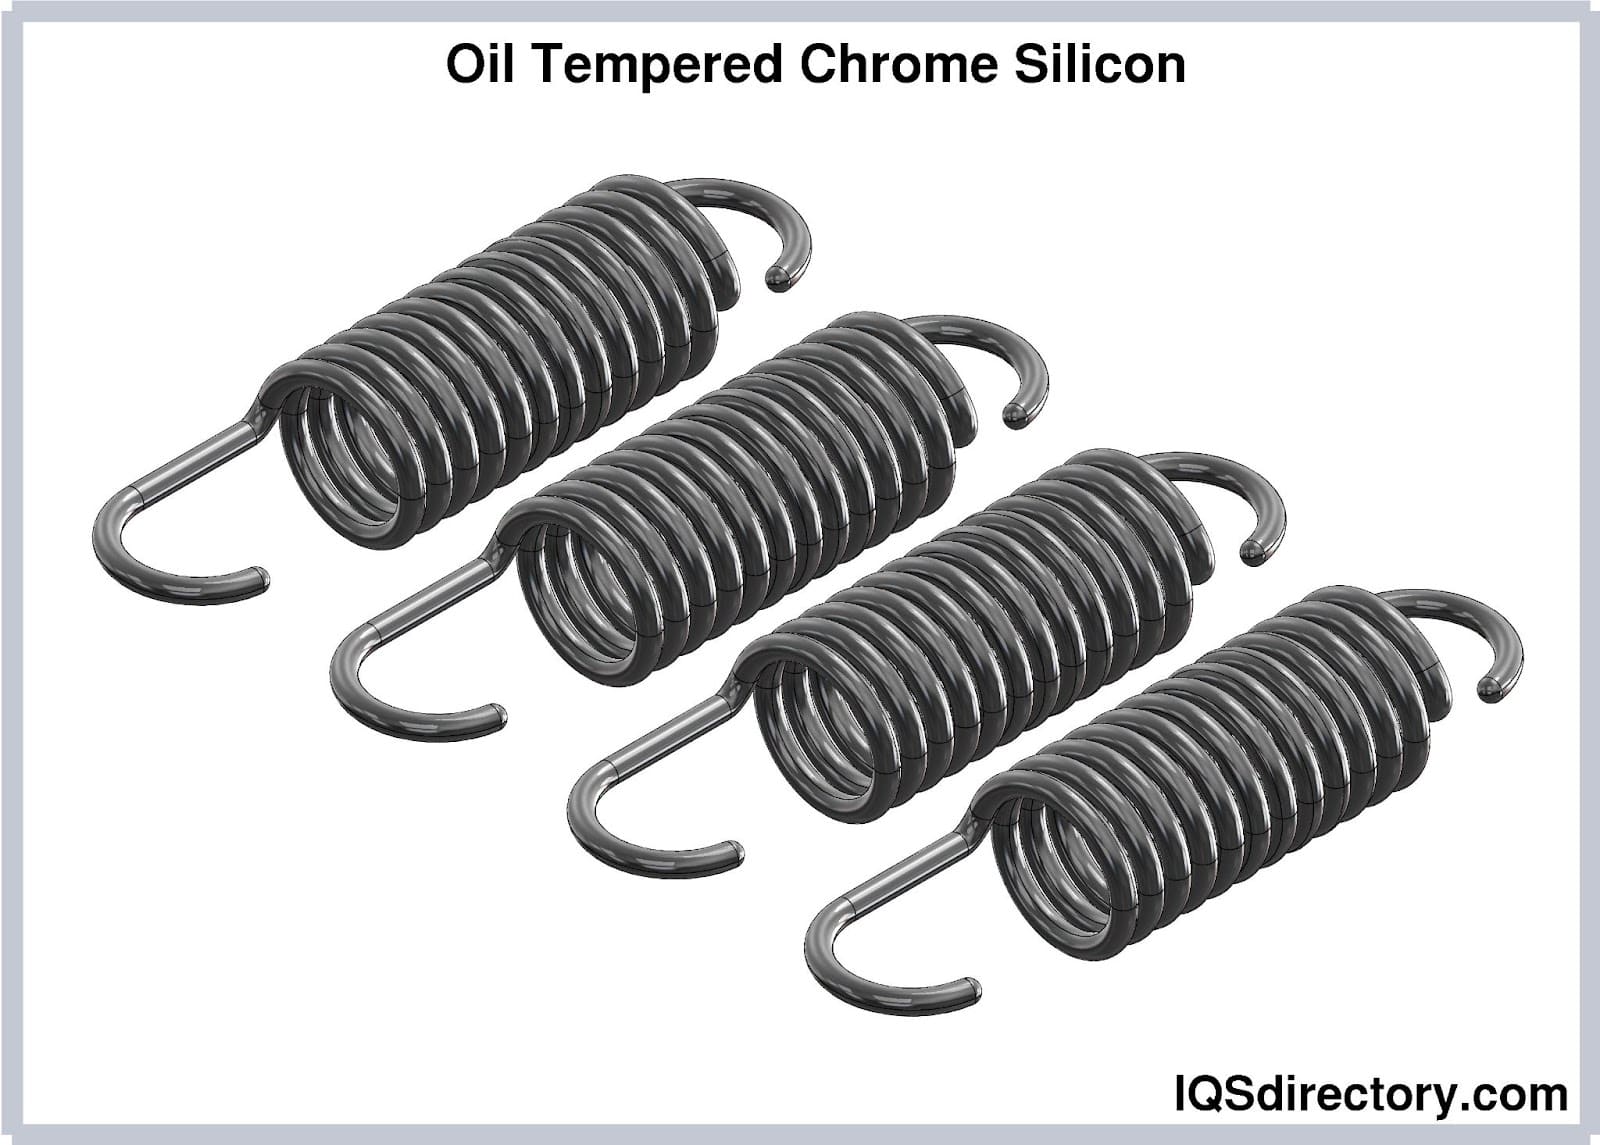 Oil Tempered Chrome Silicon